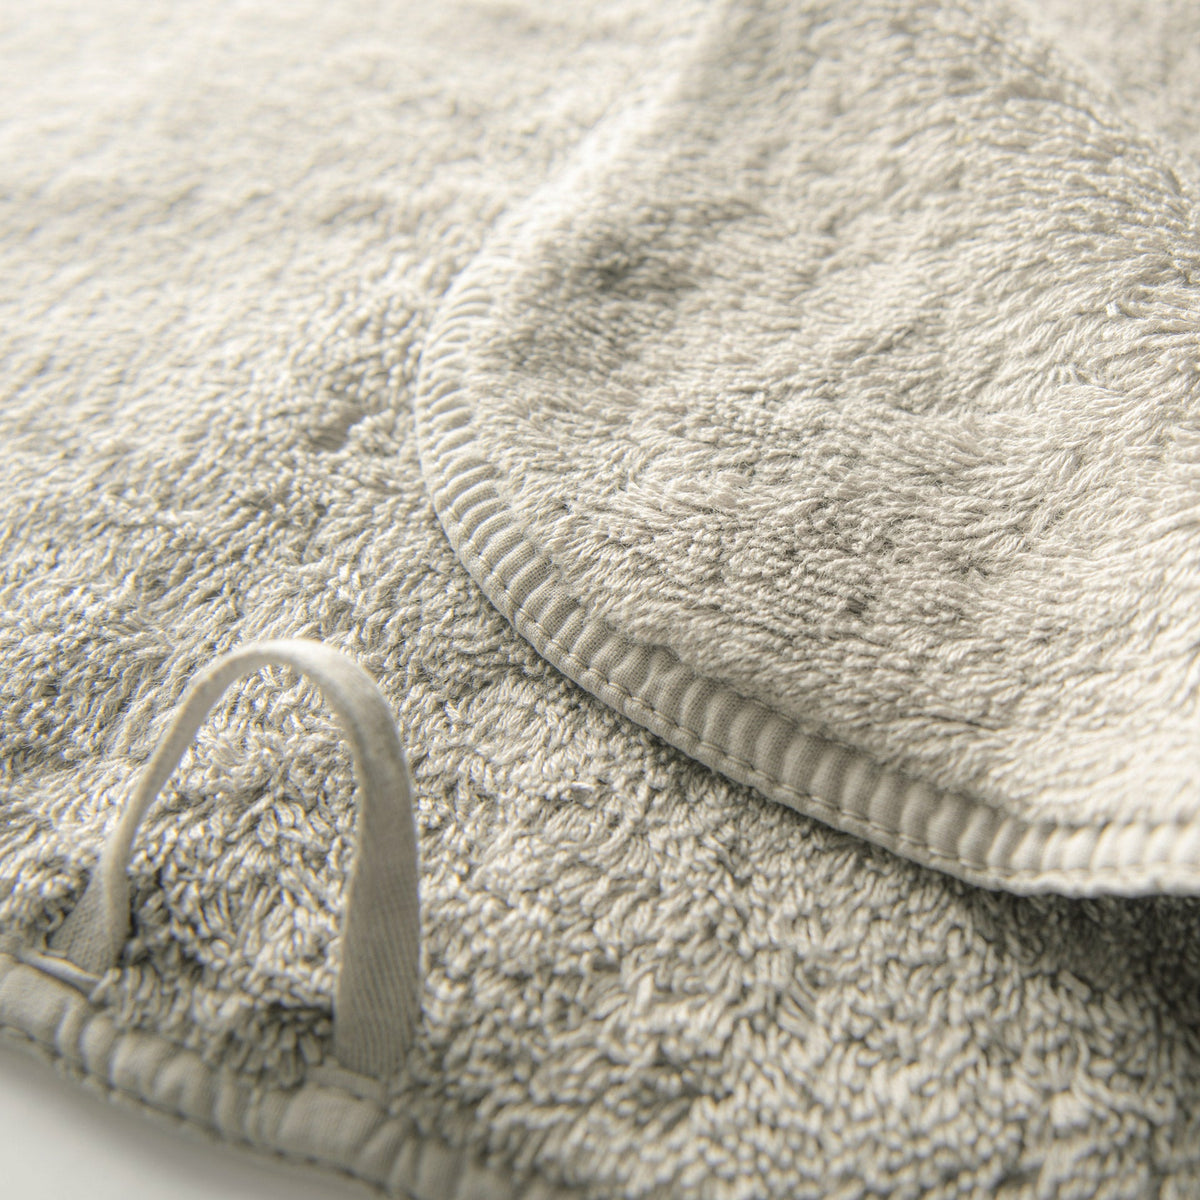 Graccioza Long Double Loop Luxury Bath Towels (Silver)